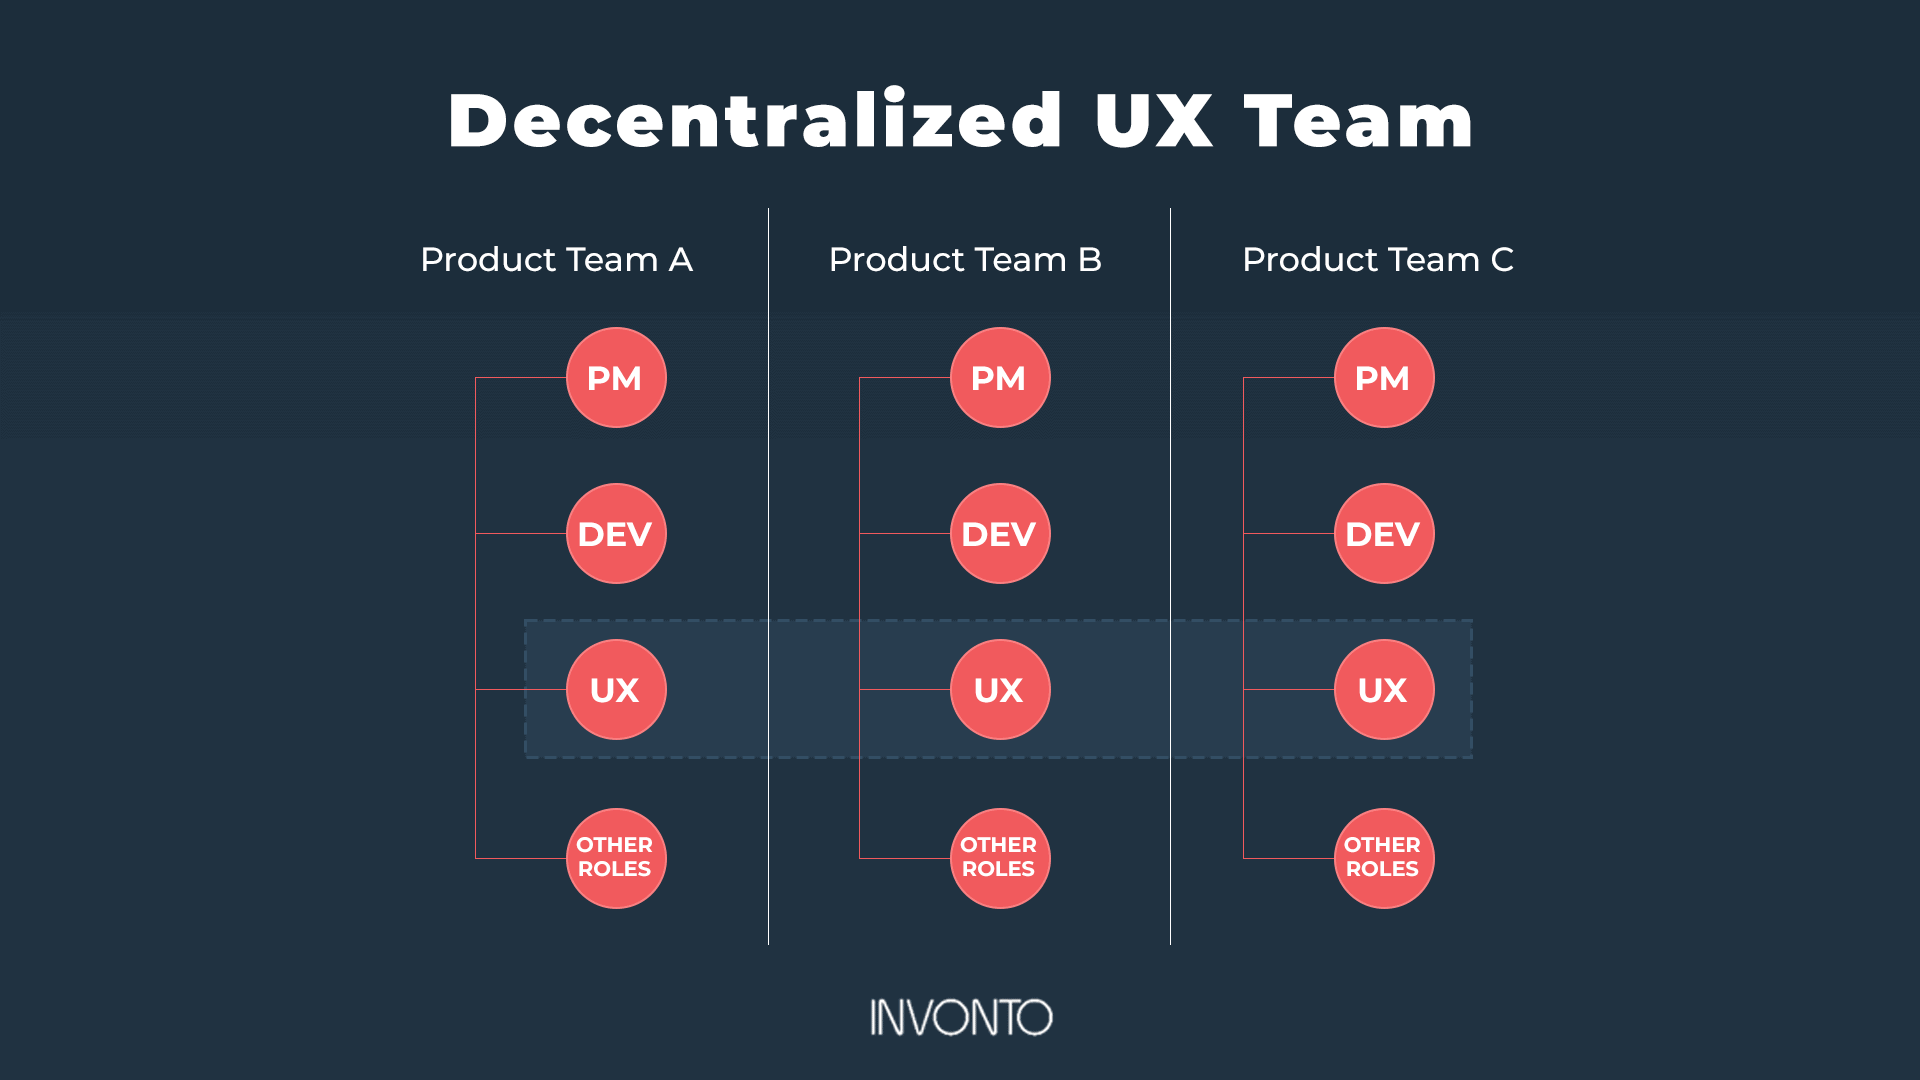 ux design process team structure example decentralized ux team